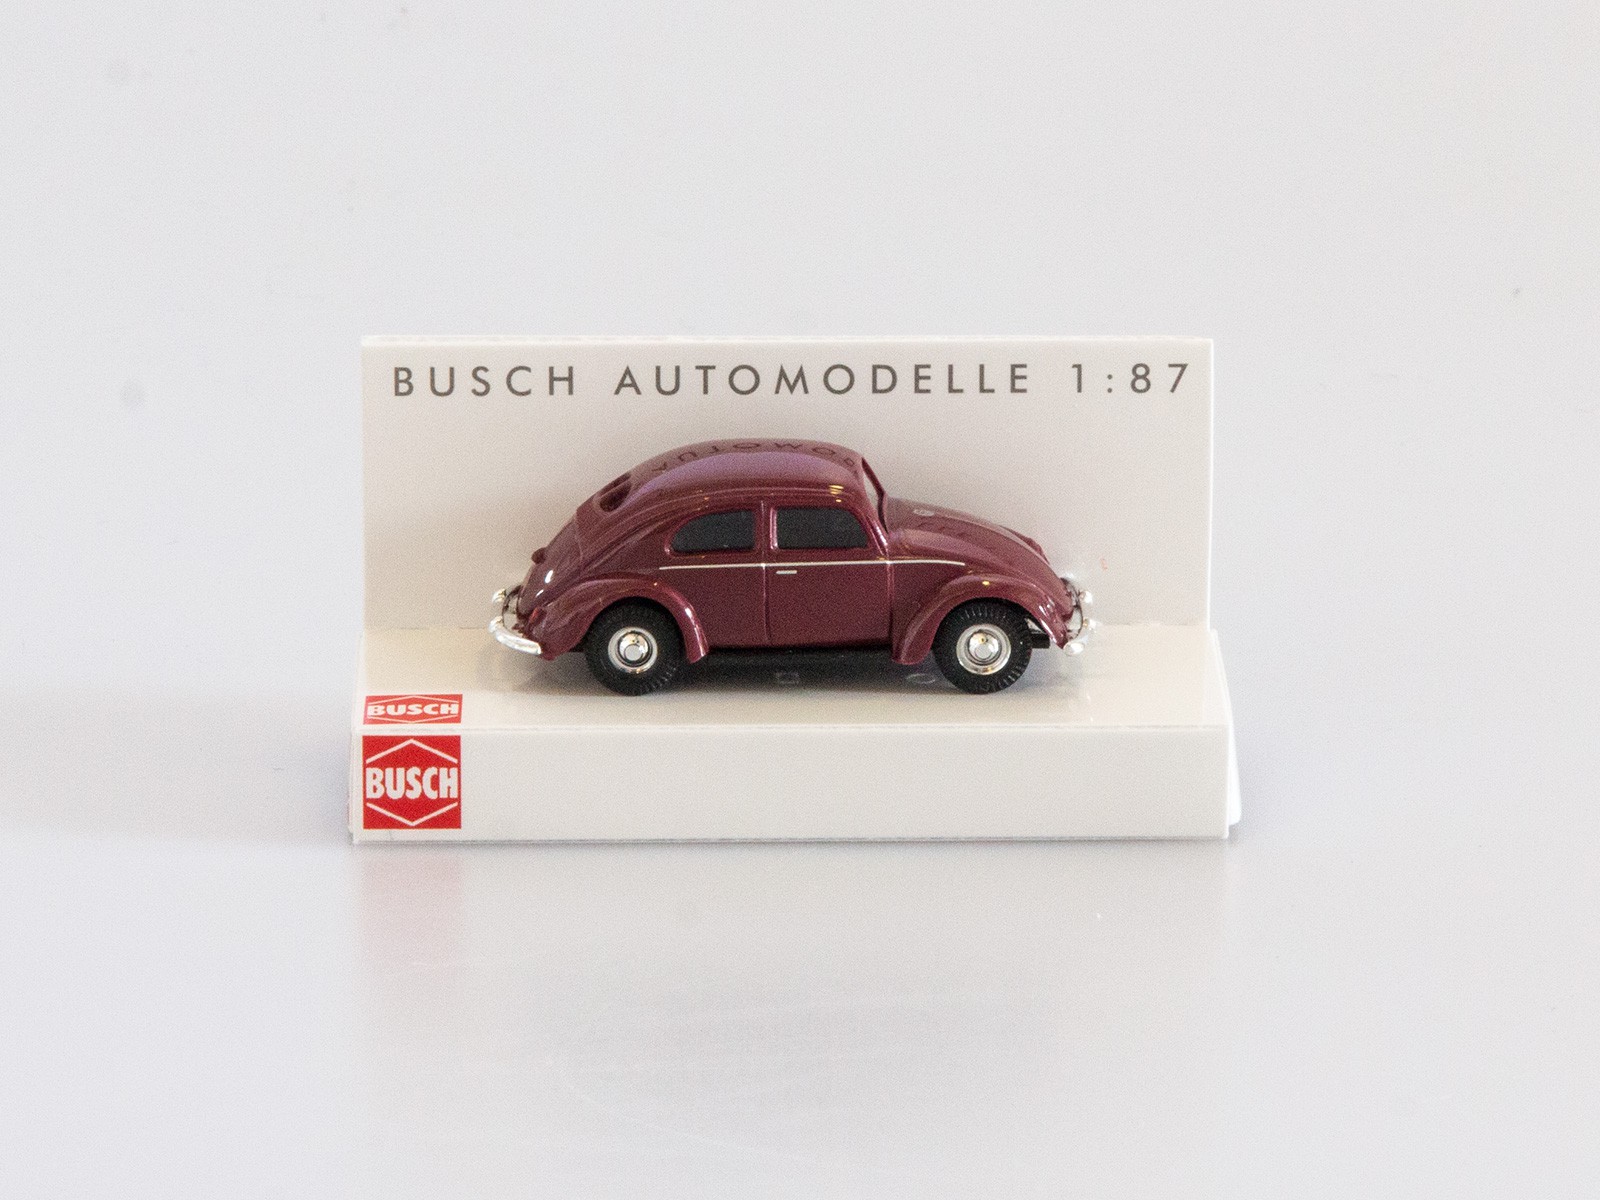 Busch 42700-112 VW Käfer mit Brezelfenster weinrot